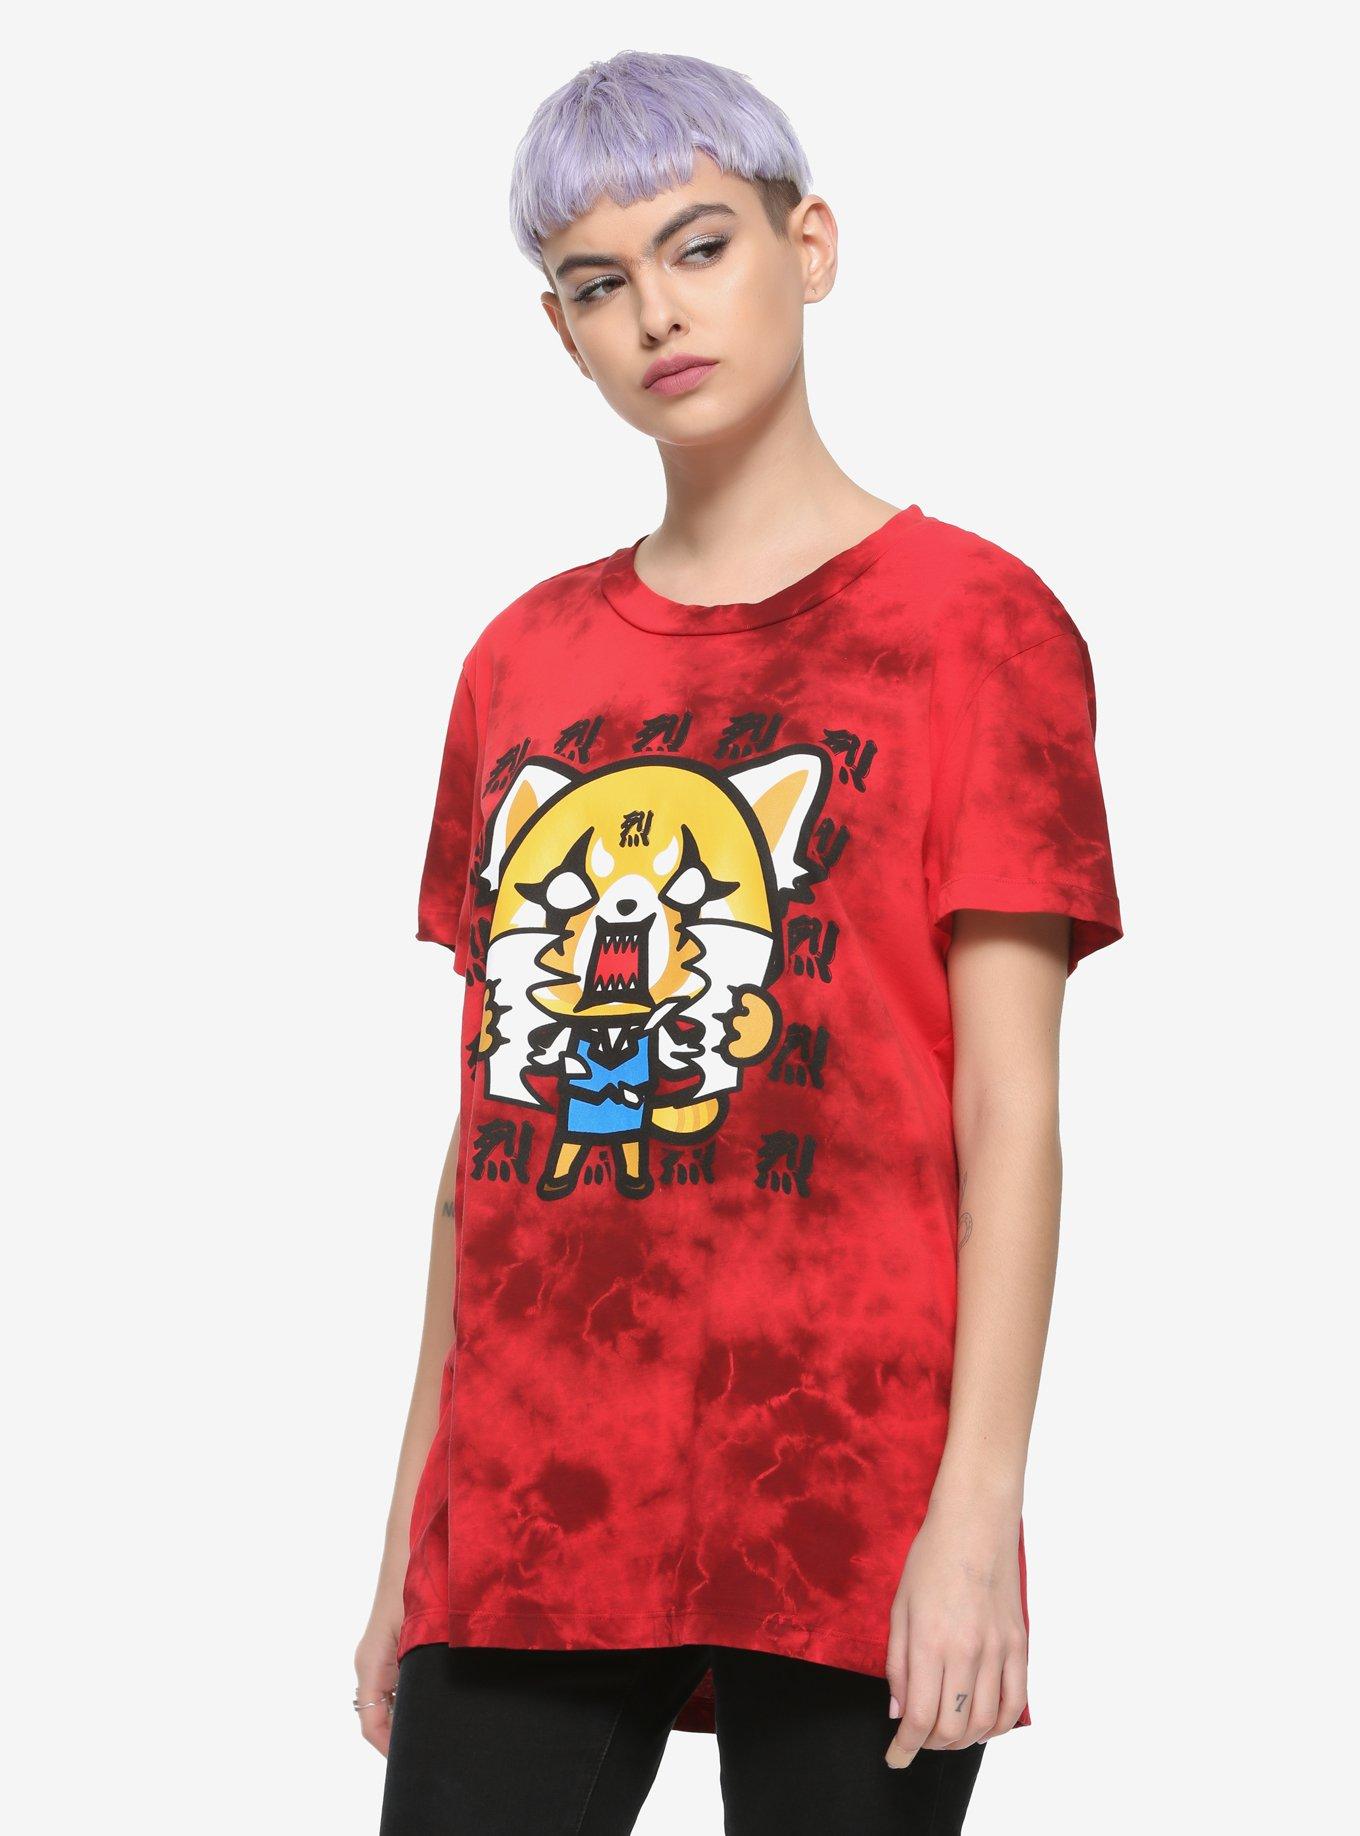 Aggretsuko Office Rage Tie-Dye Girls T-Shirt, MULTI, hi-res